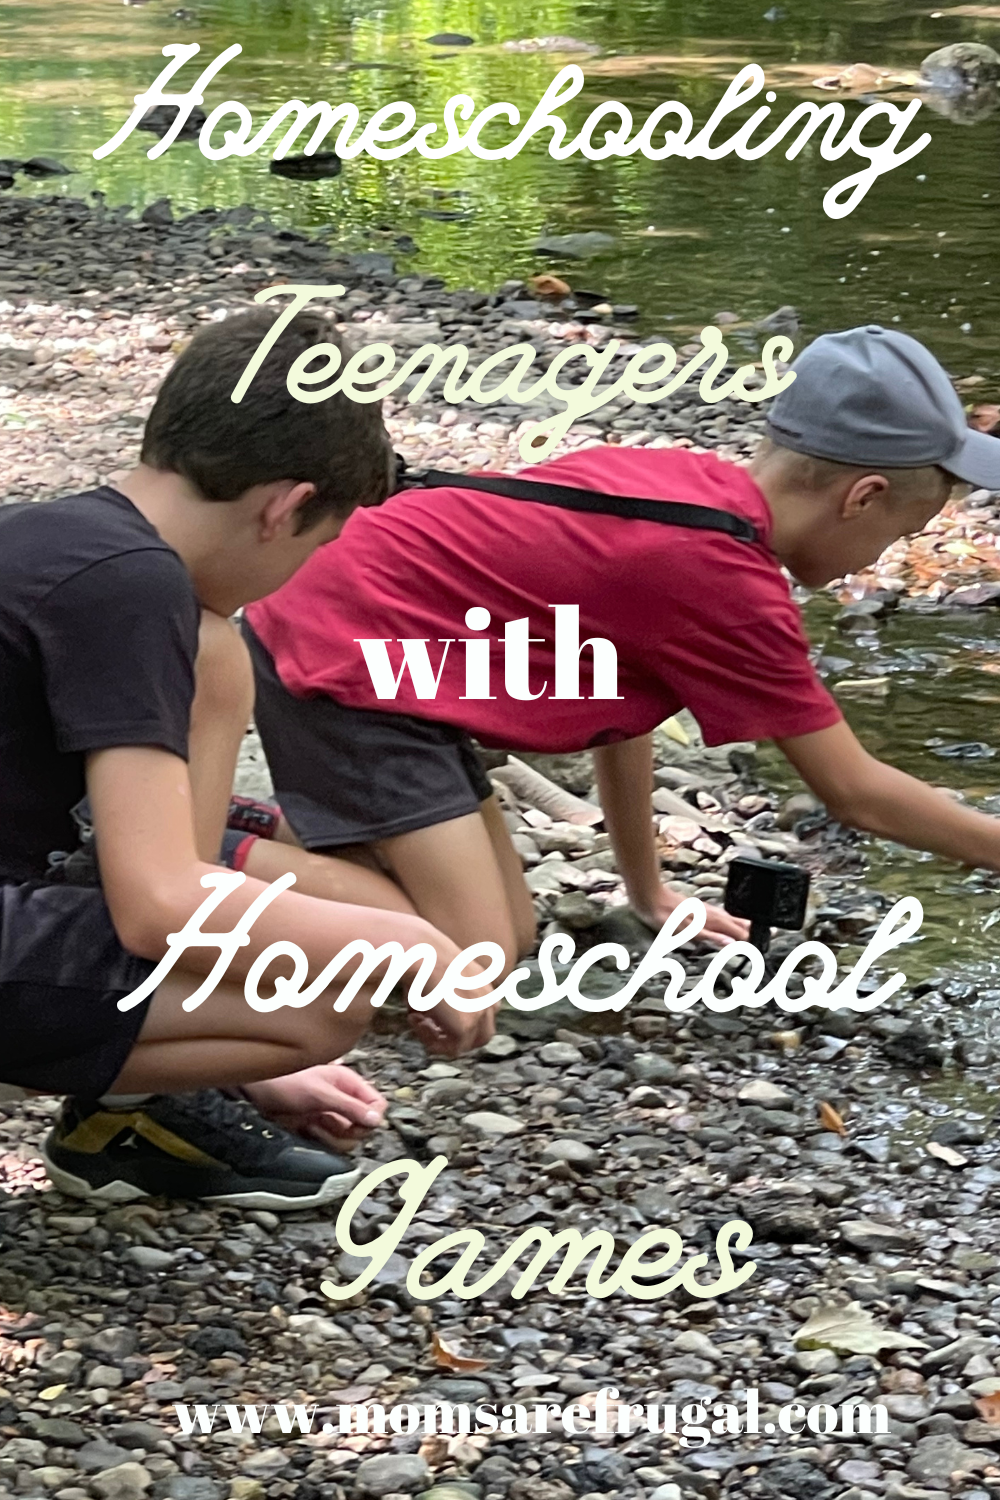 Homeschooling Teenagers with Homeschool Games